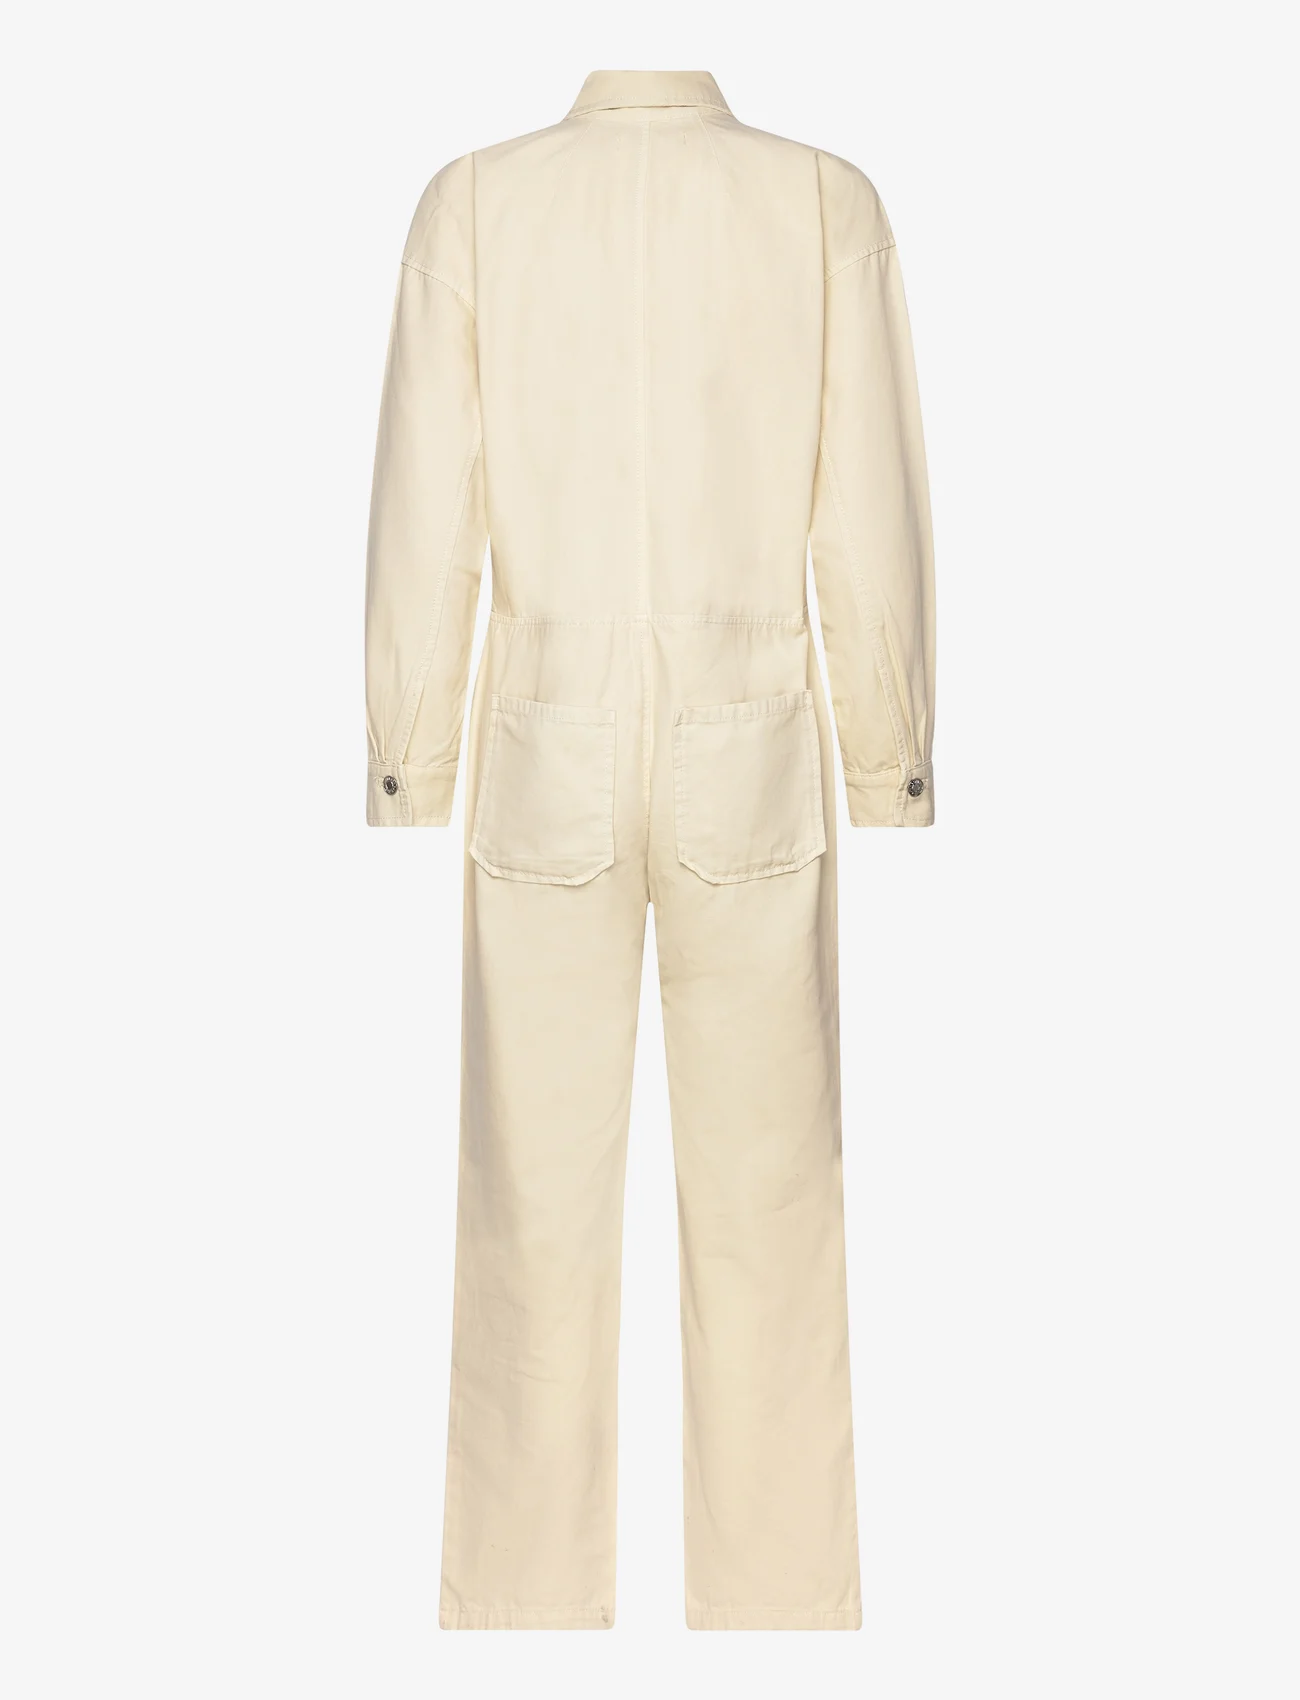 Mango - Denim zipper jumpsuit - jumpsuits - light beige - 1